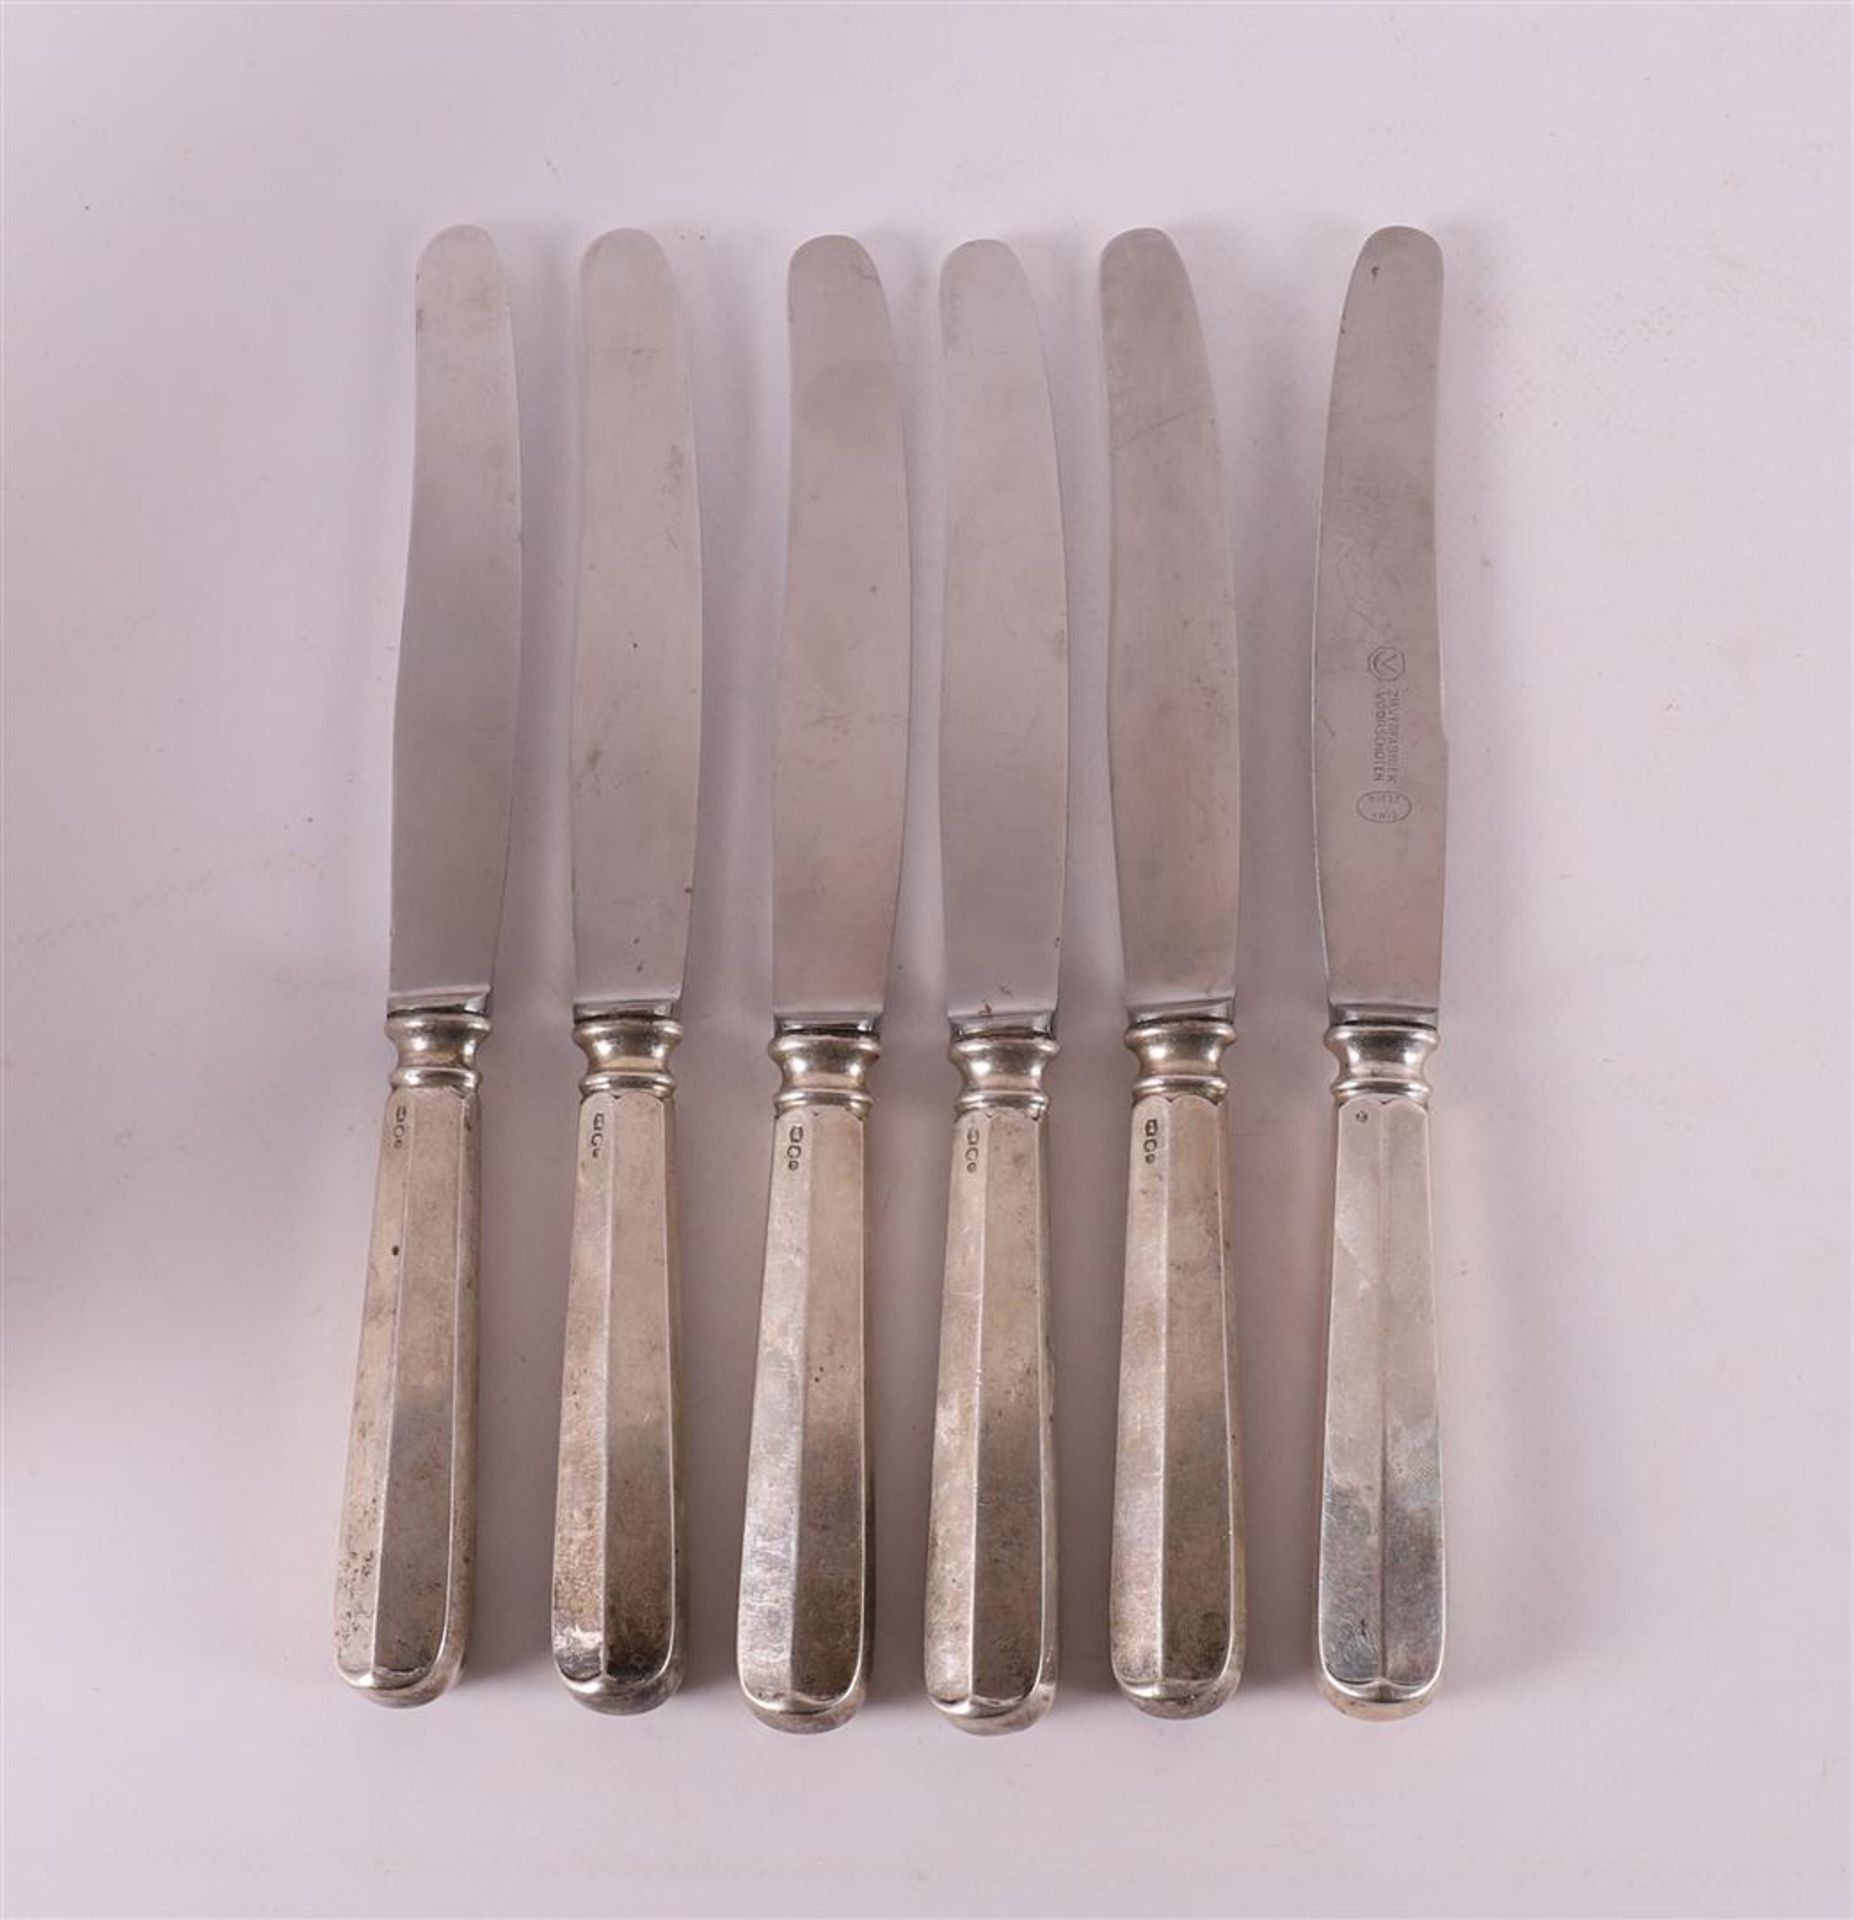 A set of six knives on silver handles, Haags Lof, Voorschoten, 1938